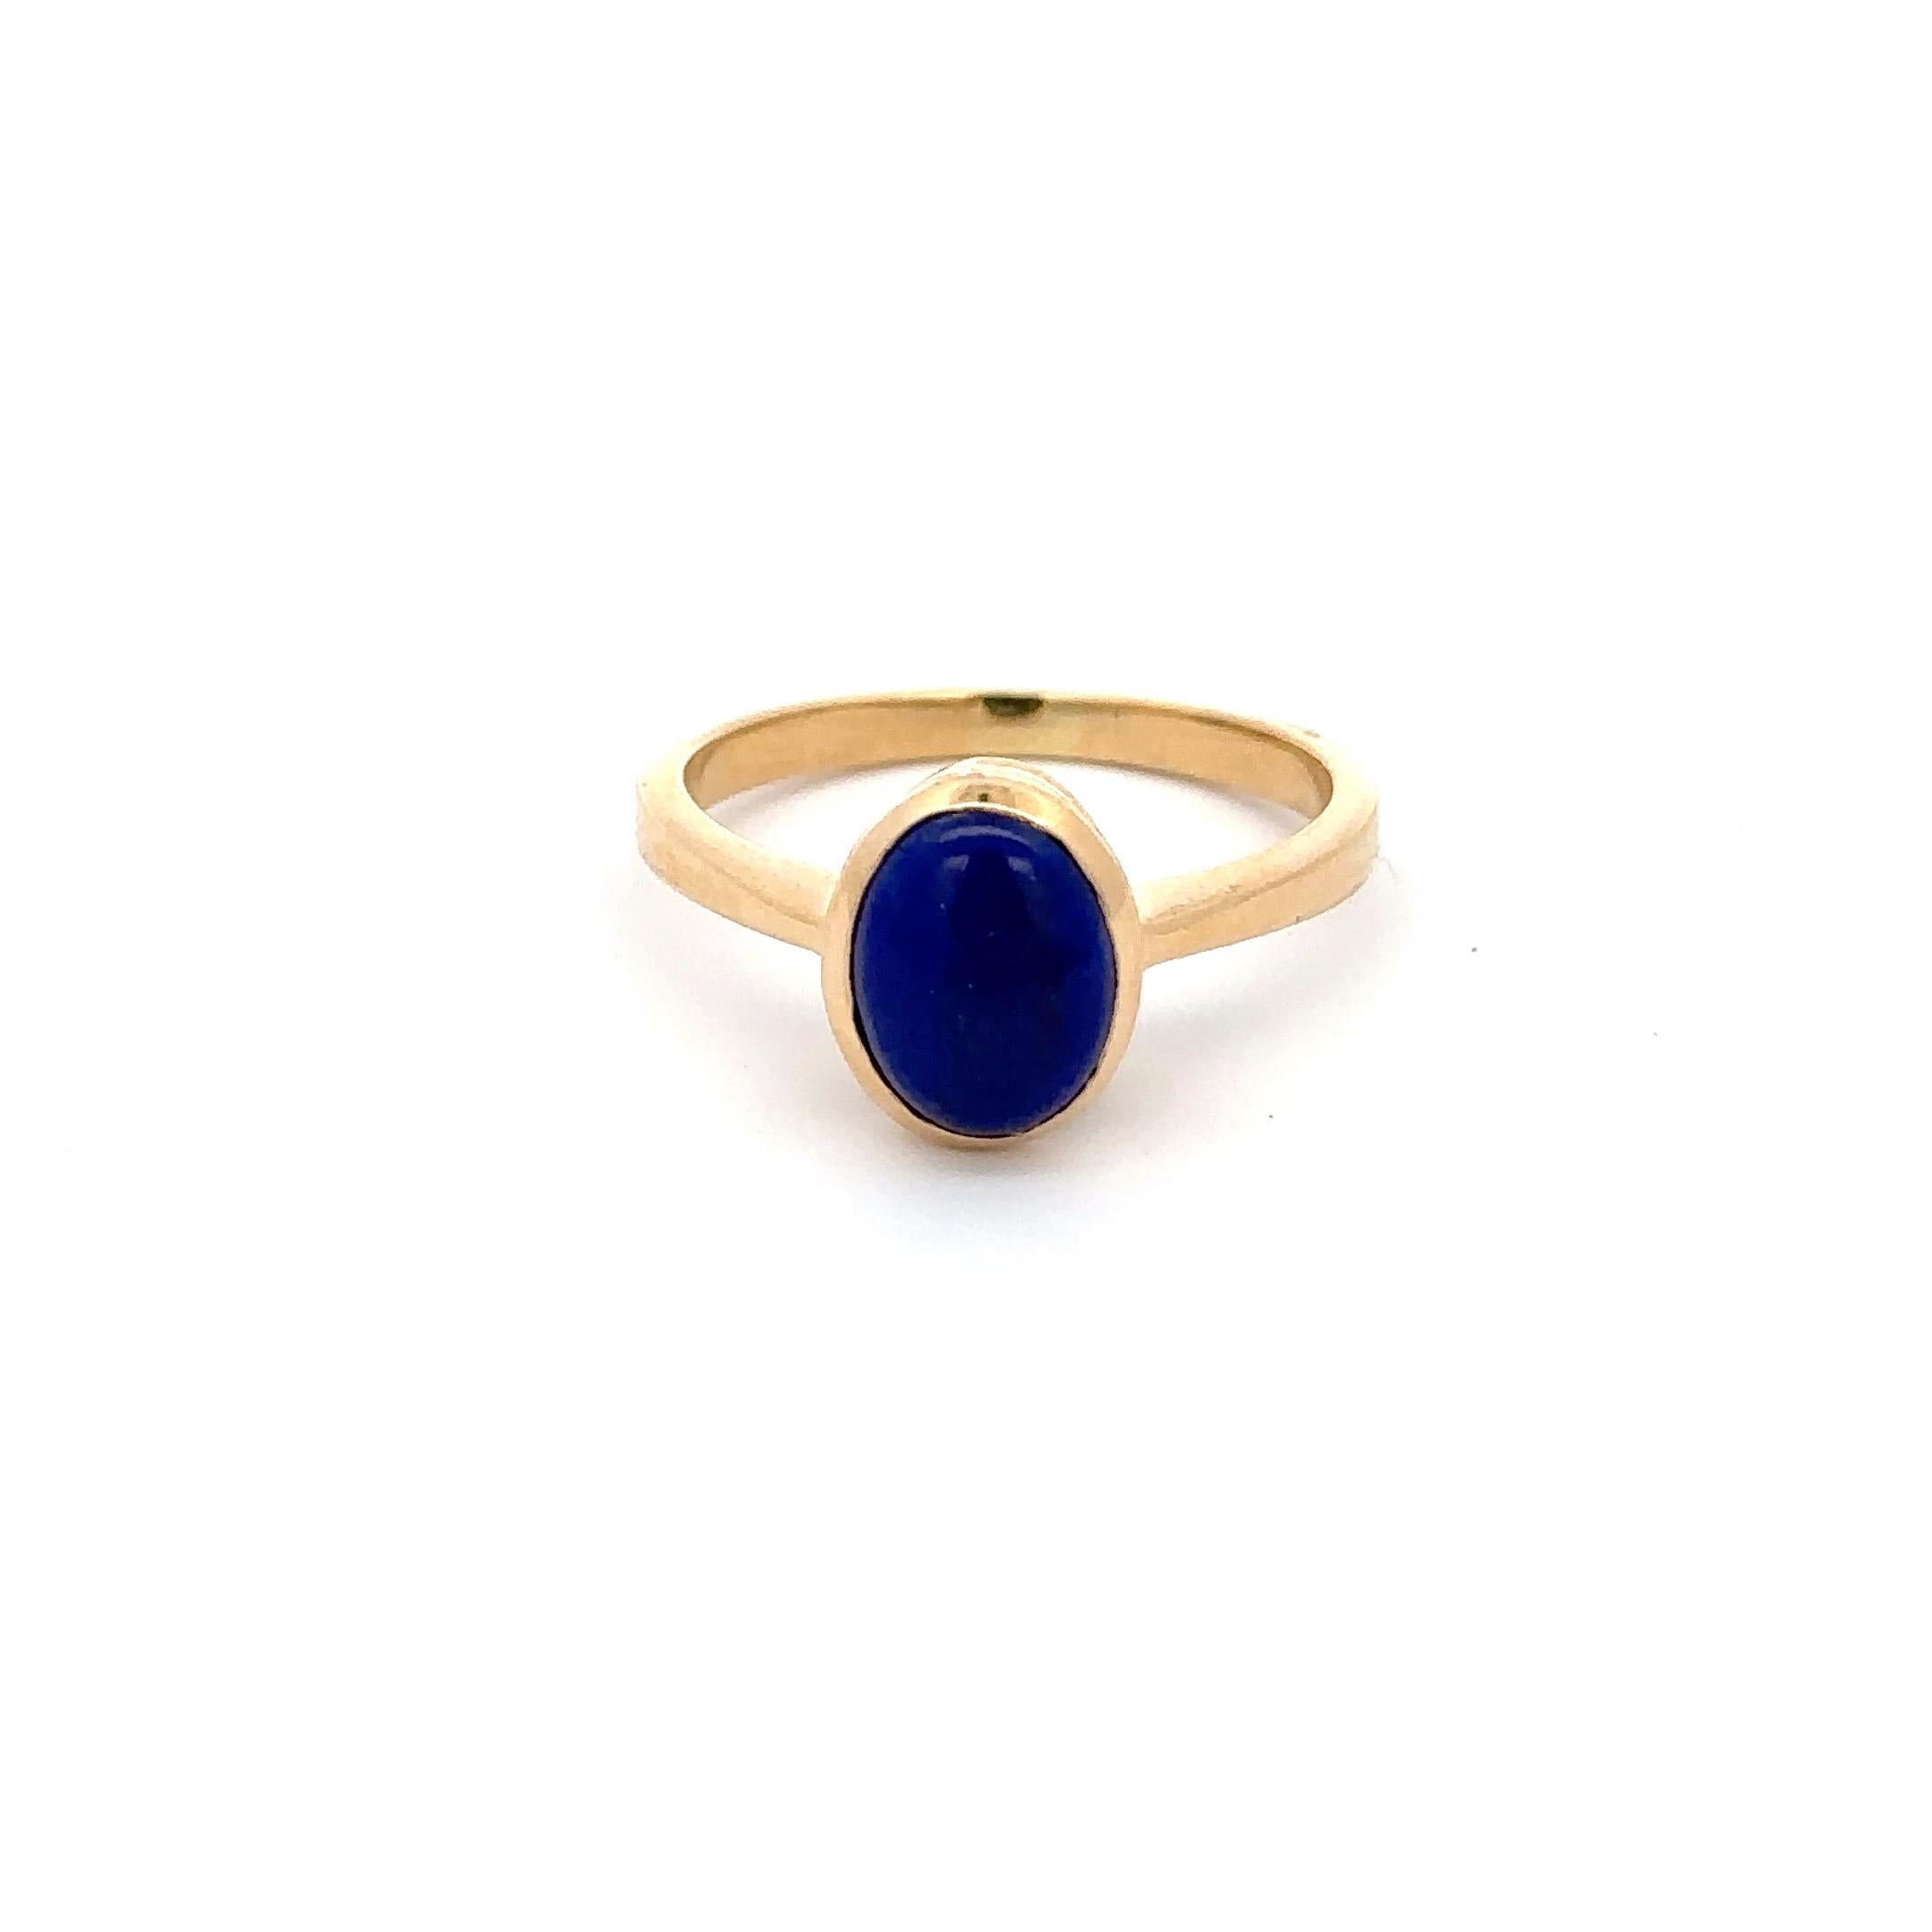 Vivid Blue Oval Lapis Lazuli Ring Made in 18 Karat Solid Yellow Gold Unisex Ring 2